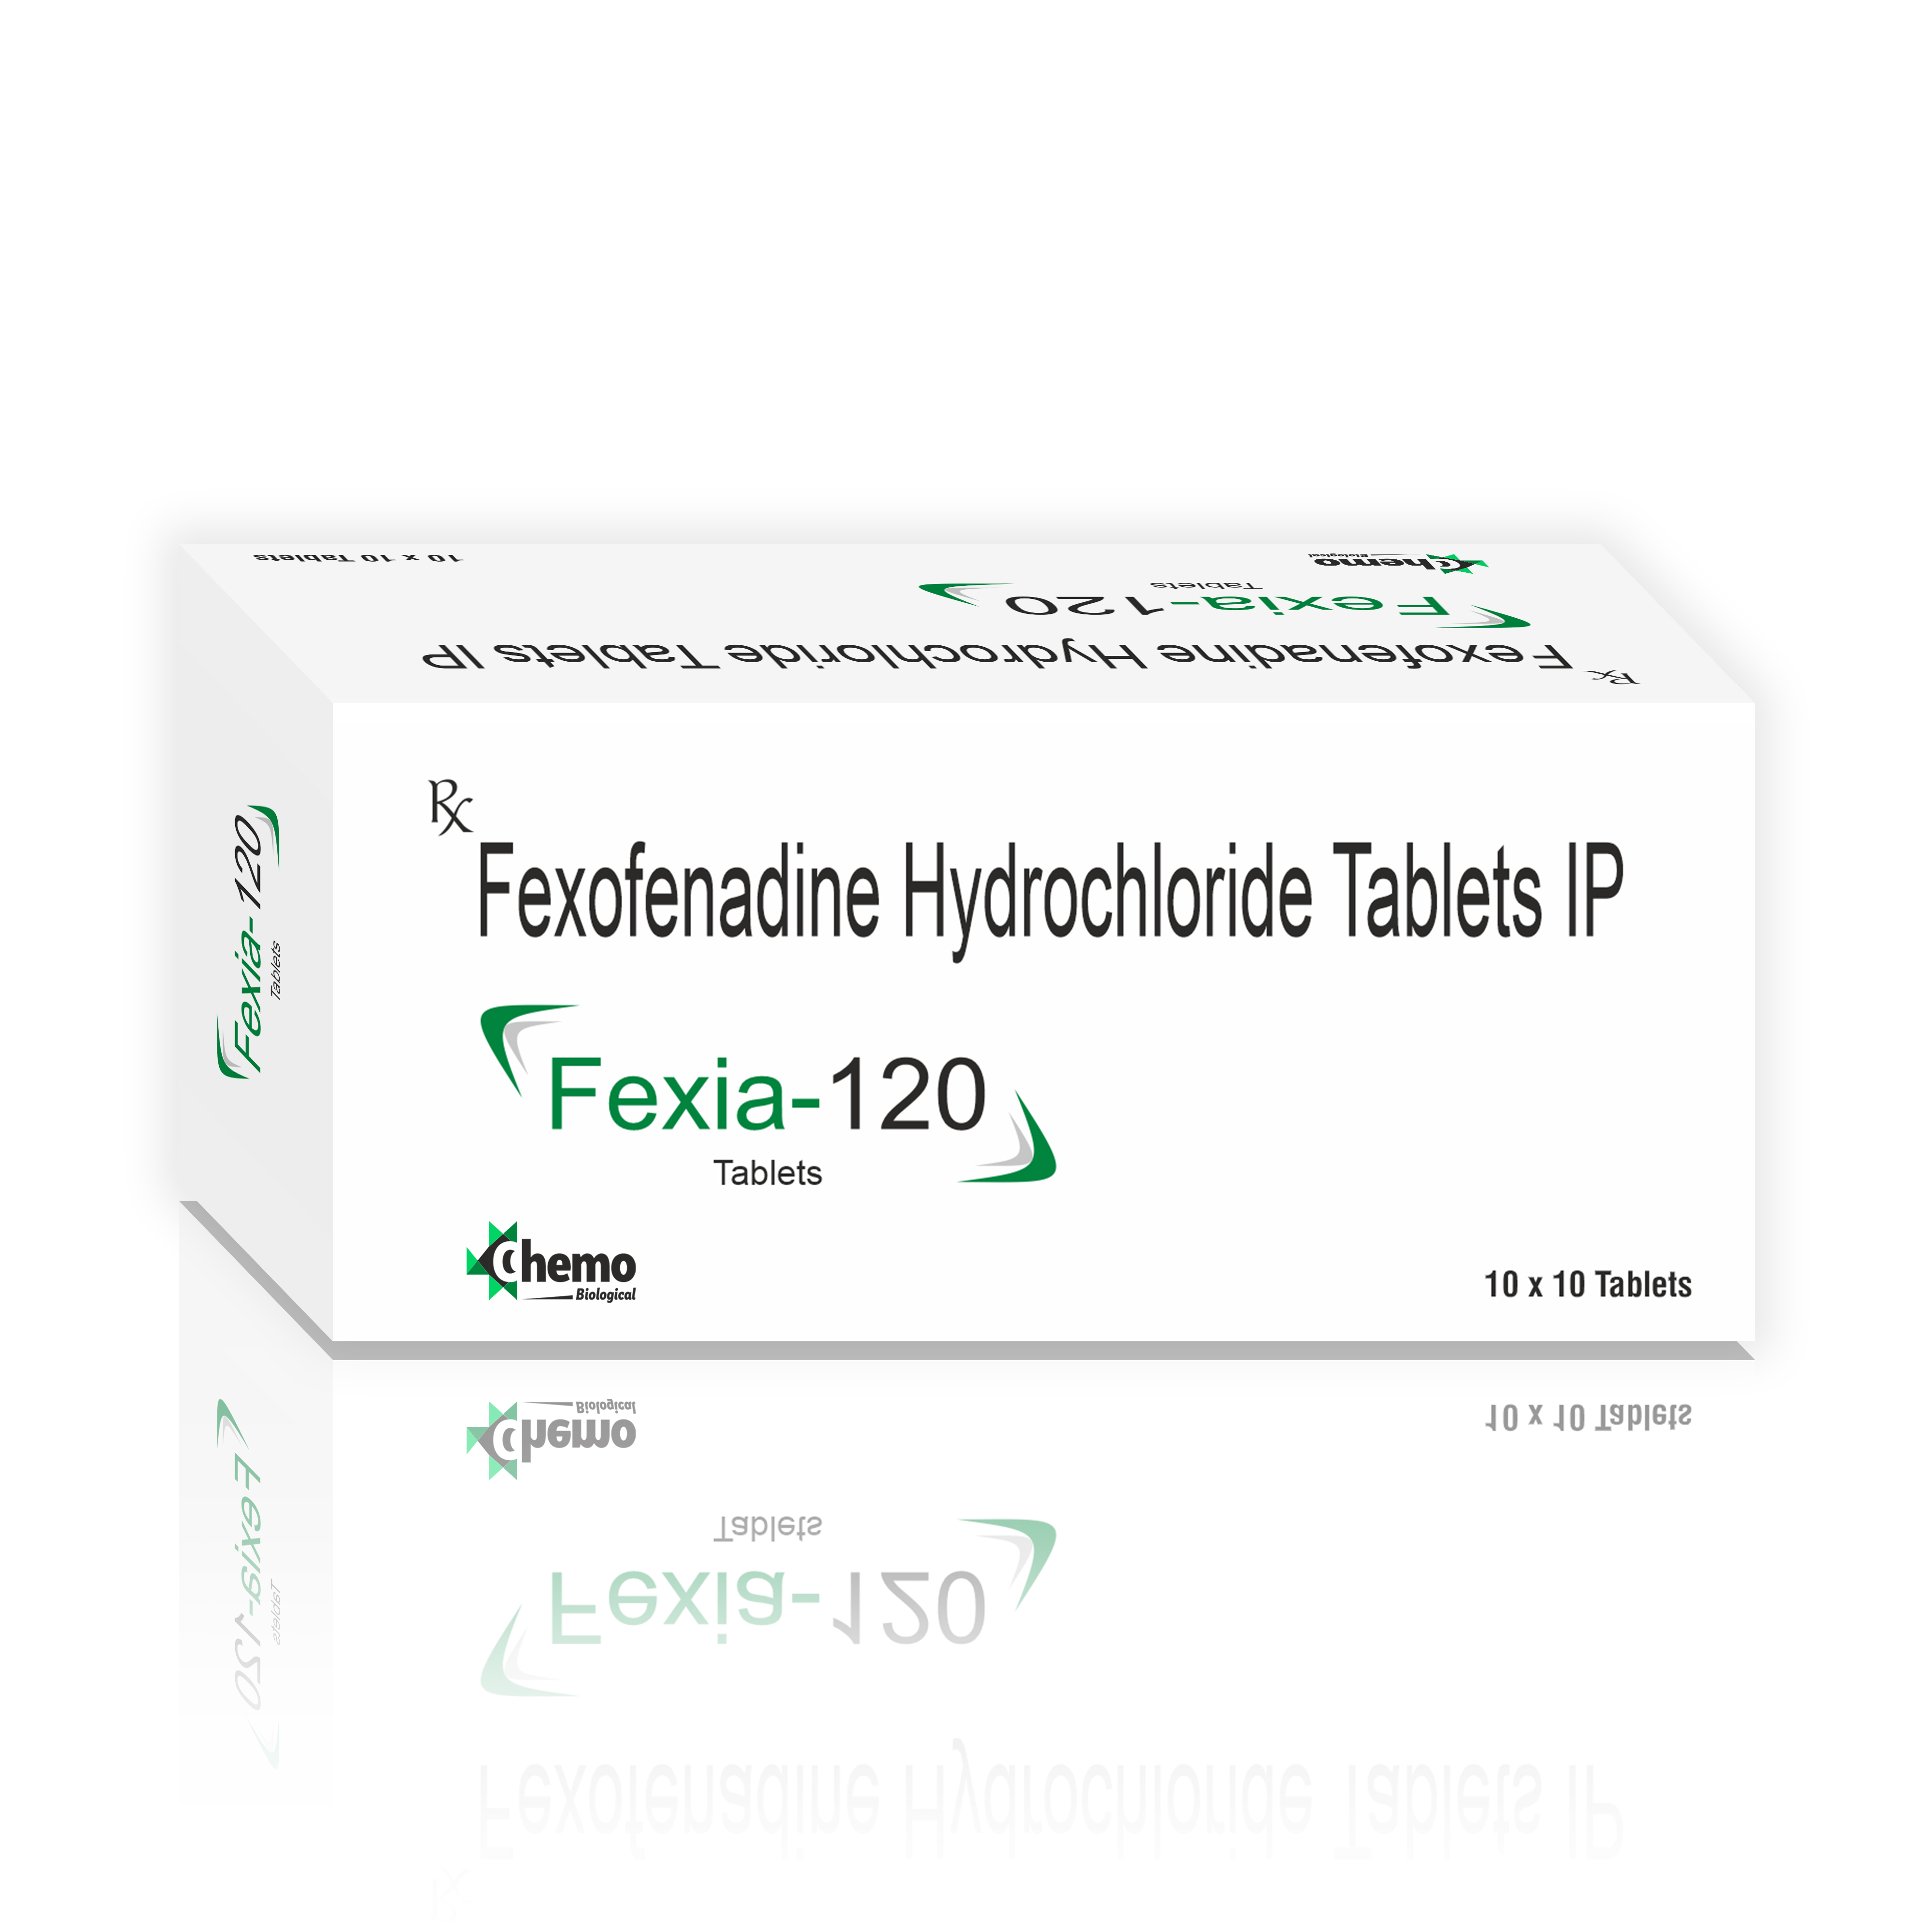 fexofenadine 120mg